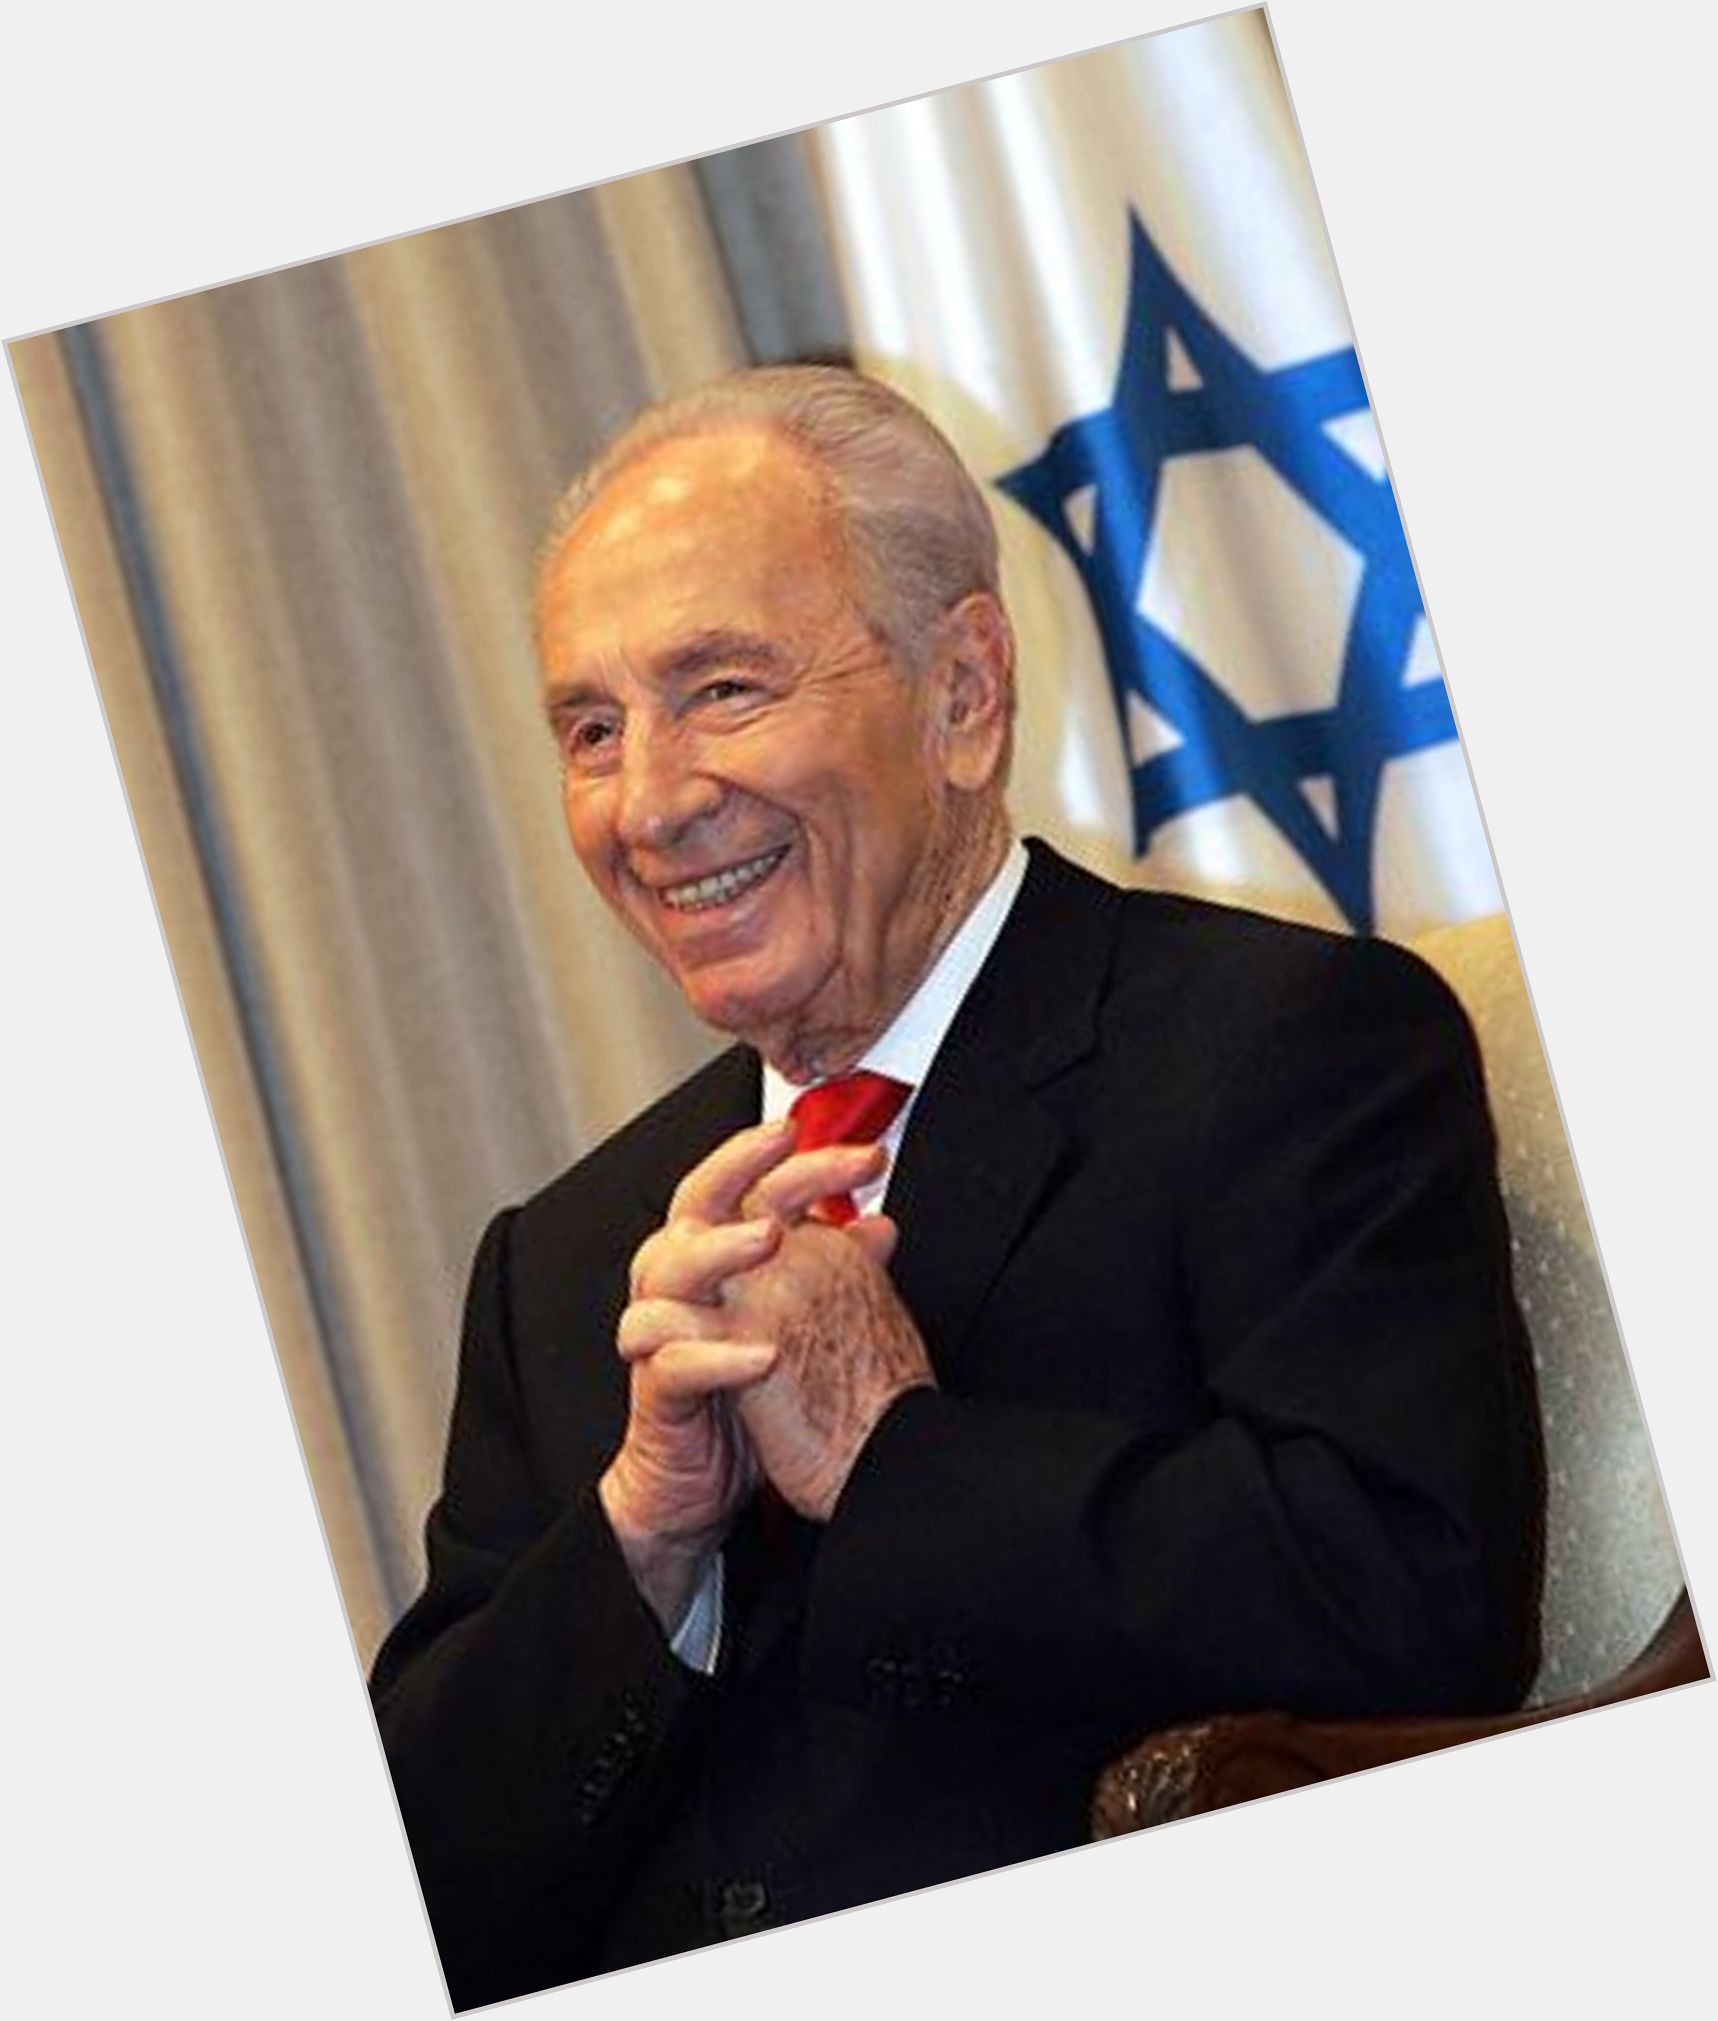 Shimon Peres hairstyle 4.jpg